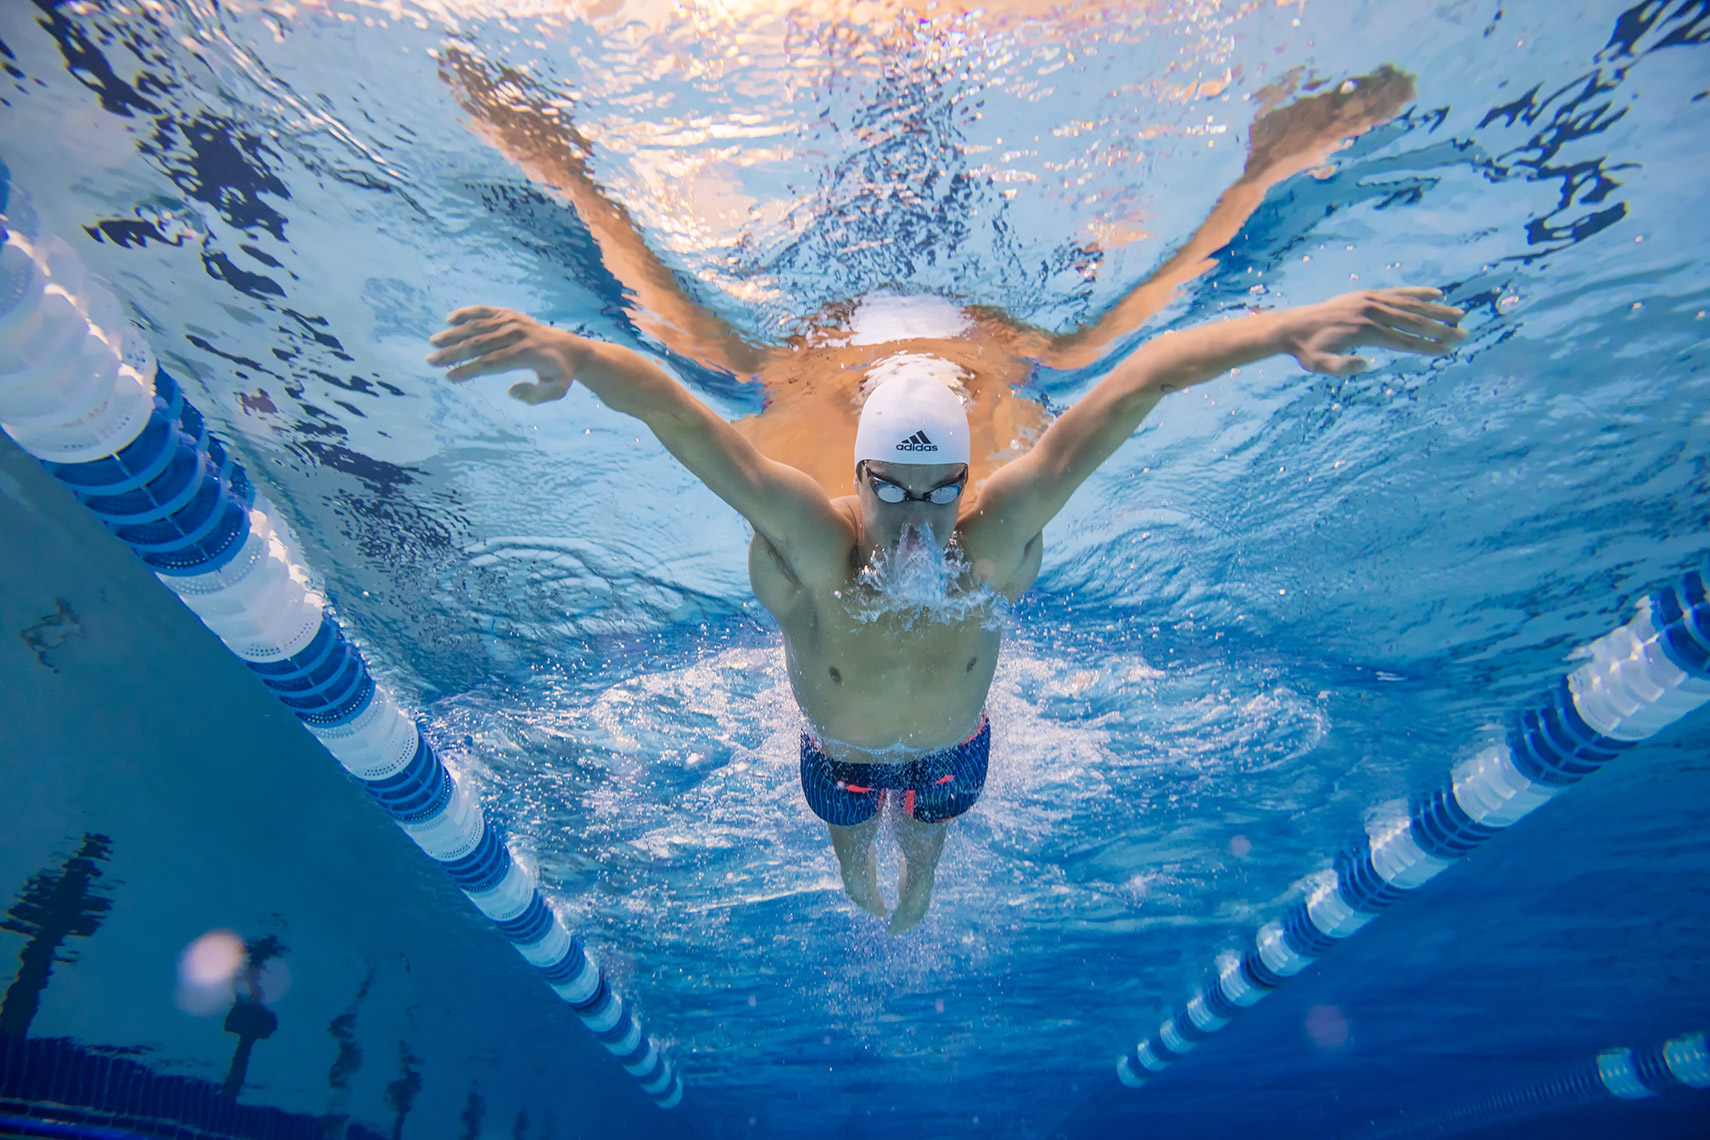 Olympic swimmer underwater photographer Rich Crowder